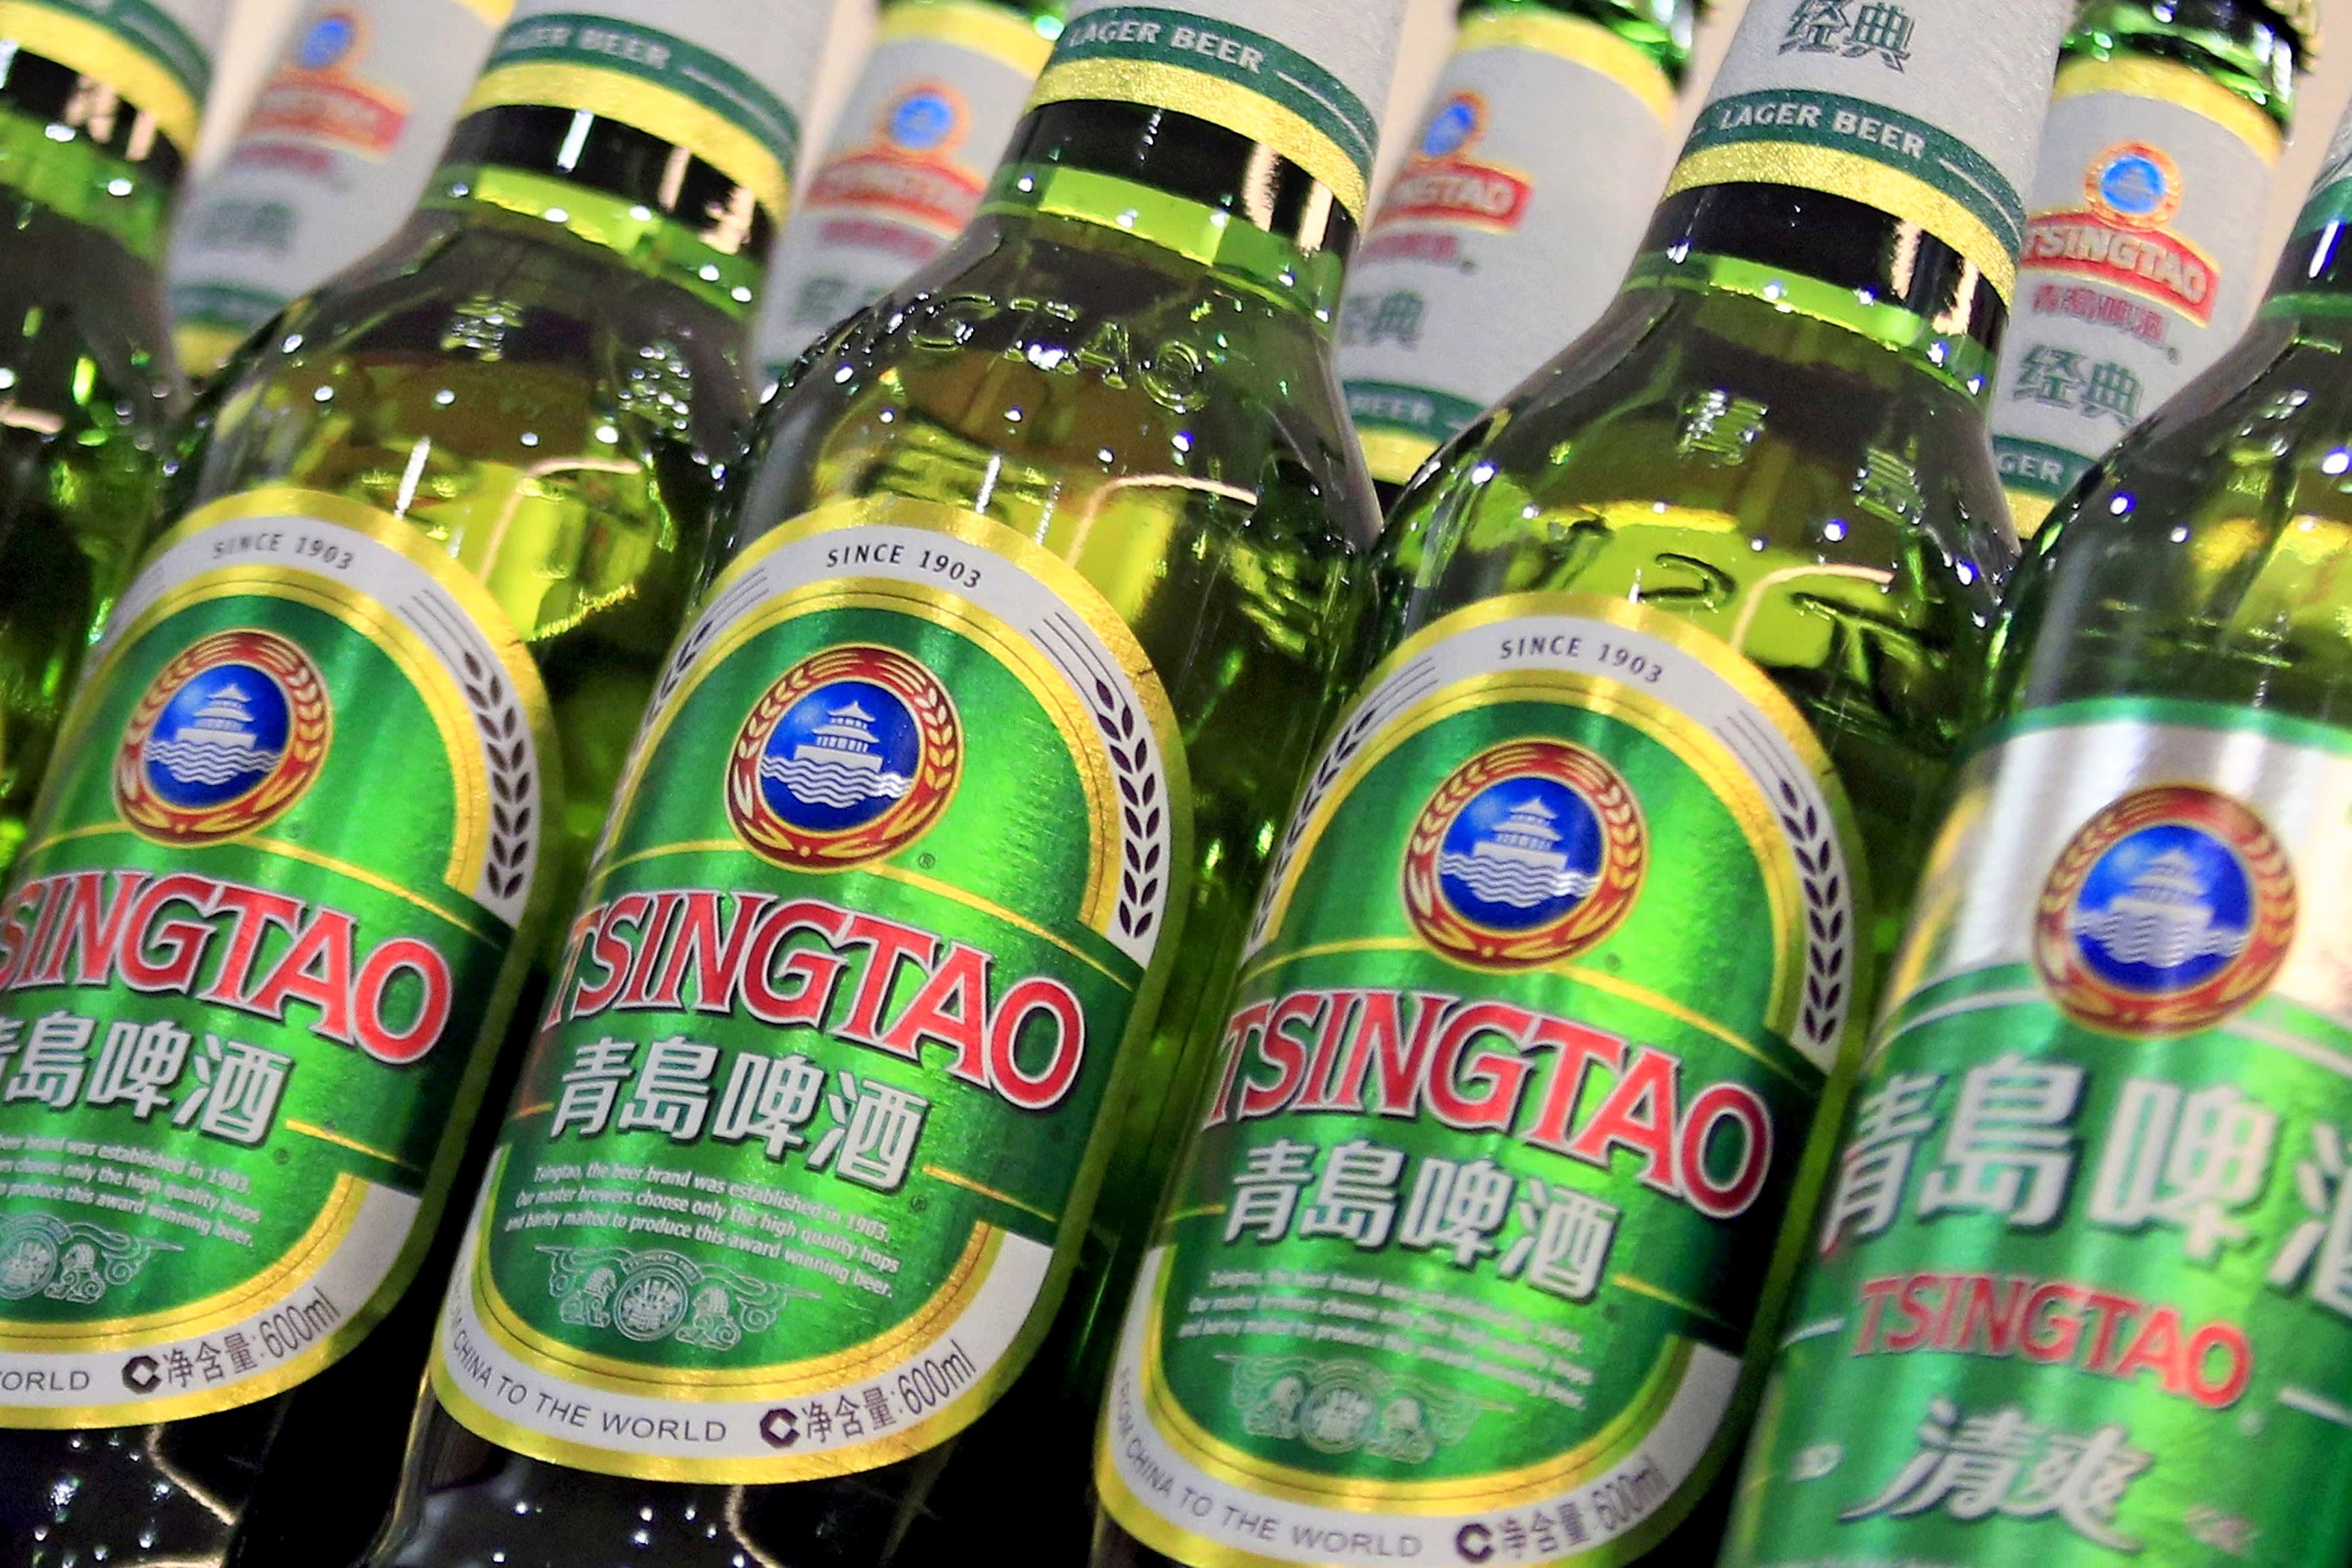 many bottles of Tsingtao beer